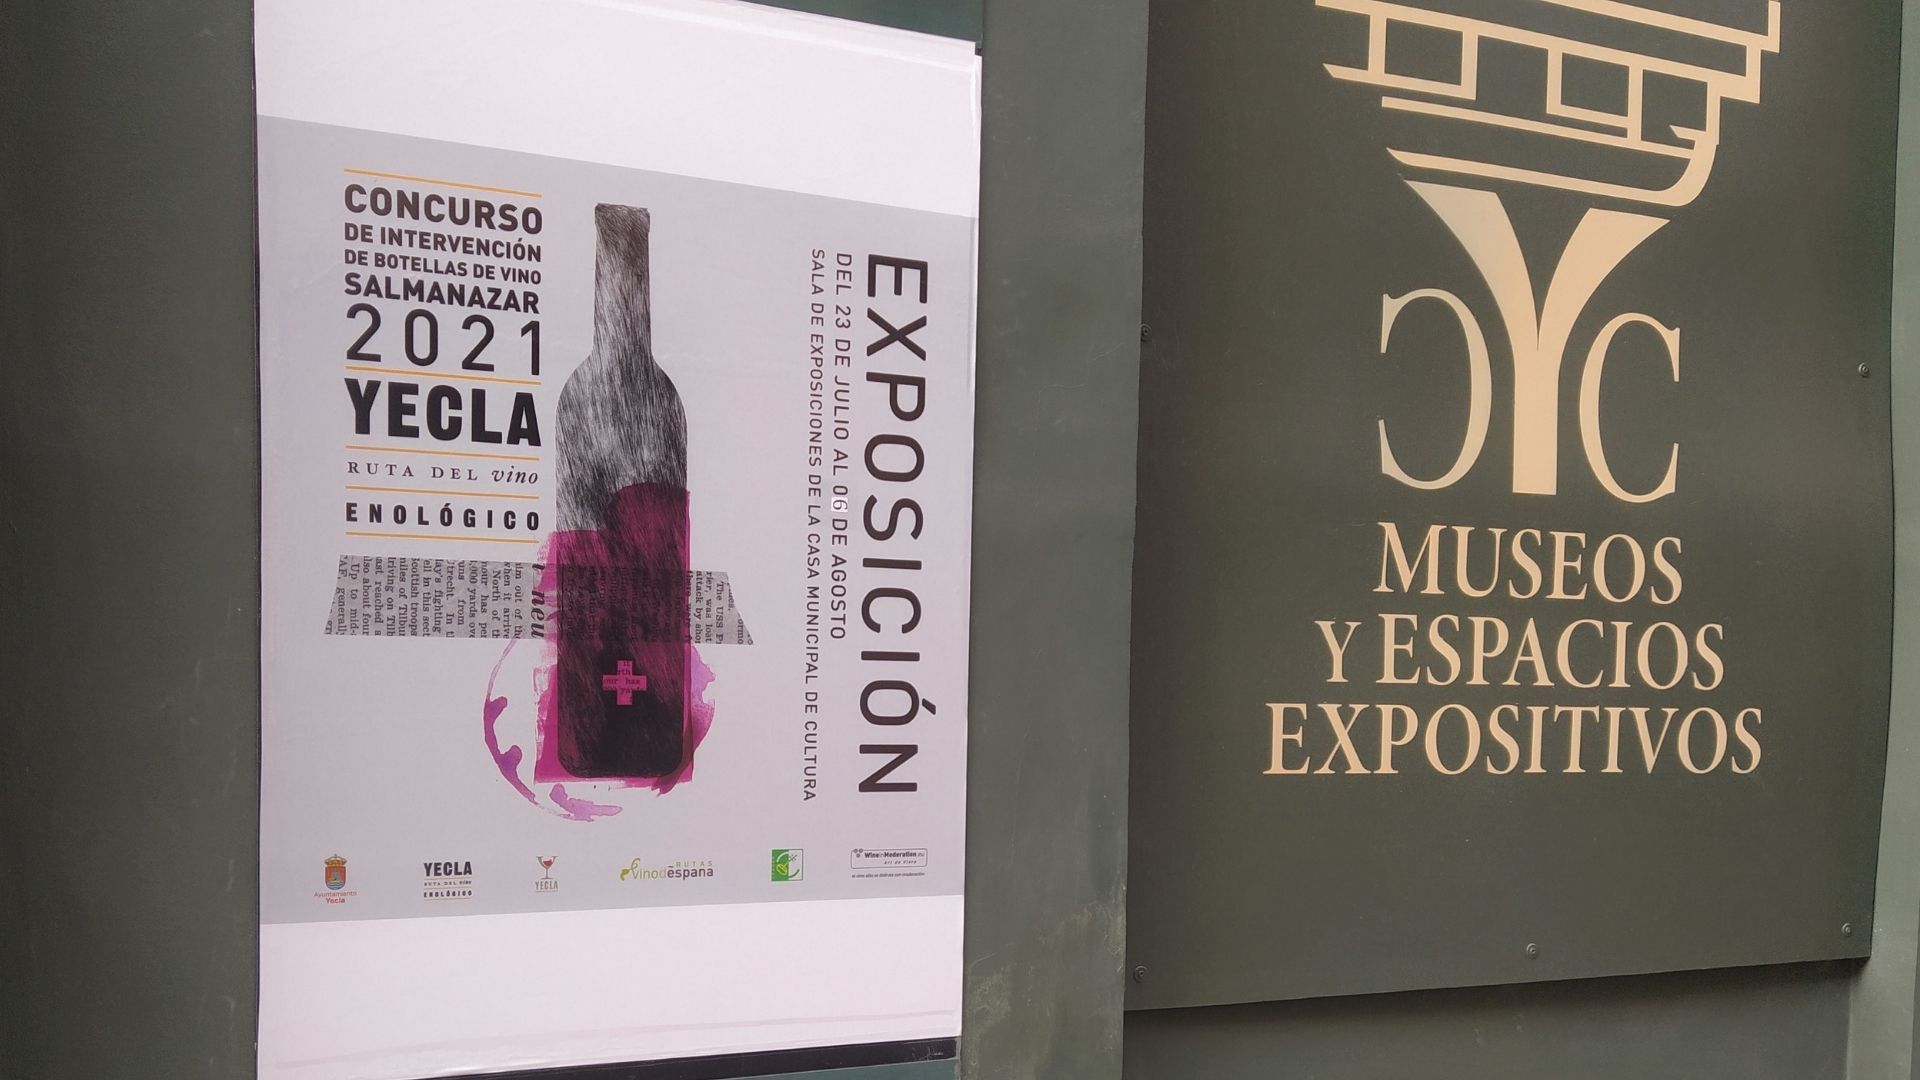 Inauguración exposición del concurso de  Intervención de botellas de vino salmanazar